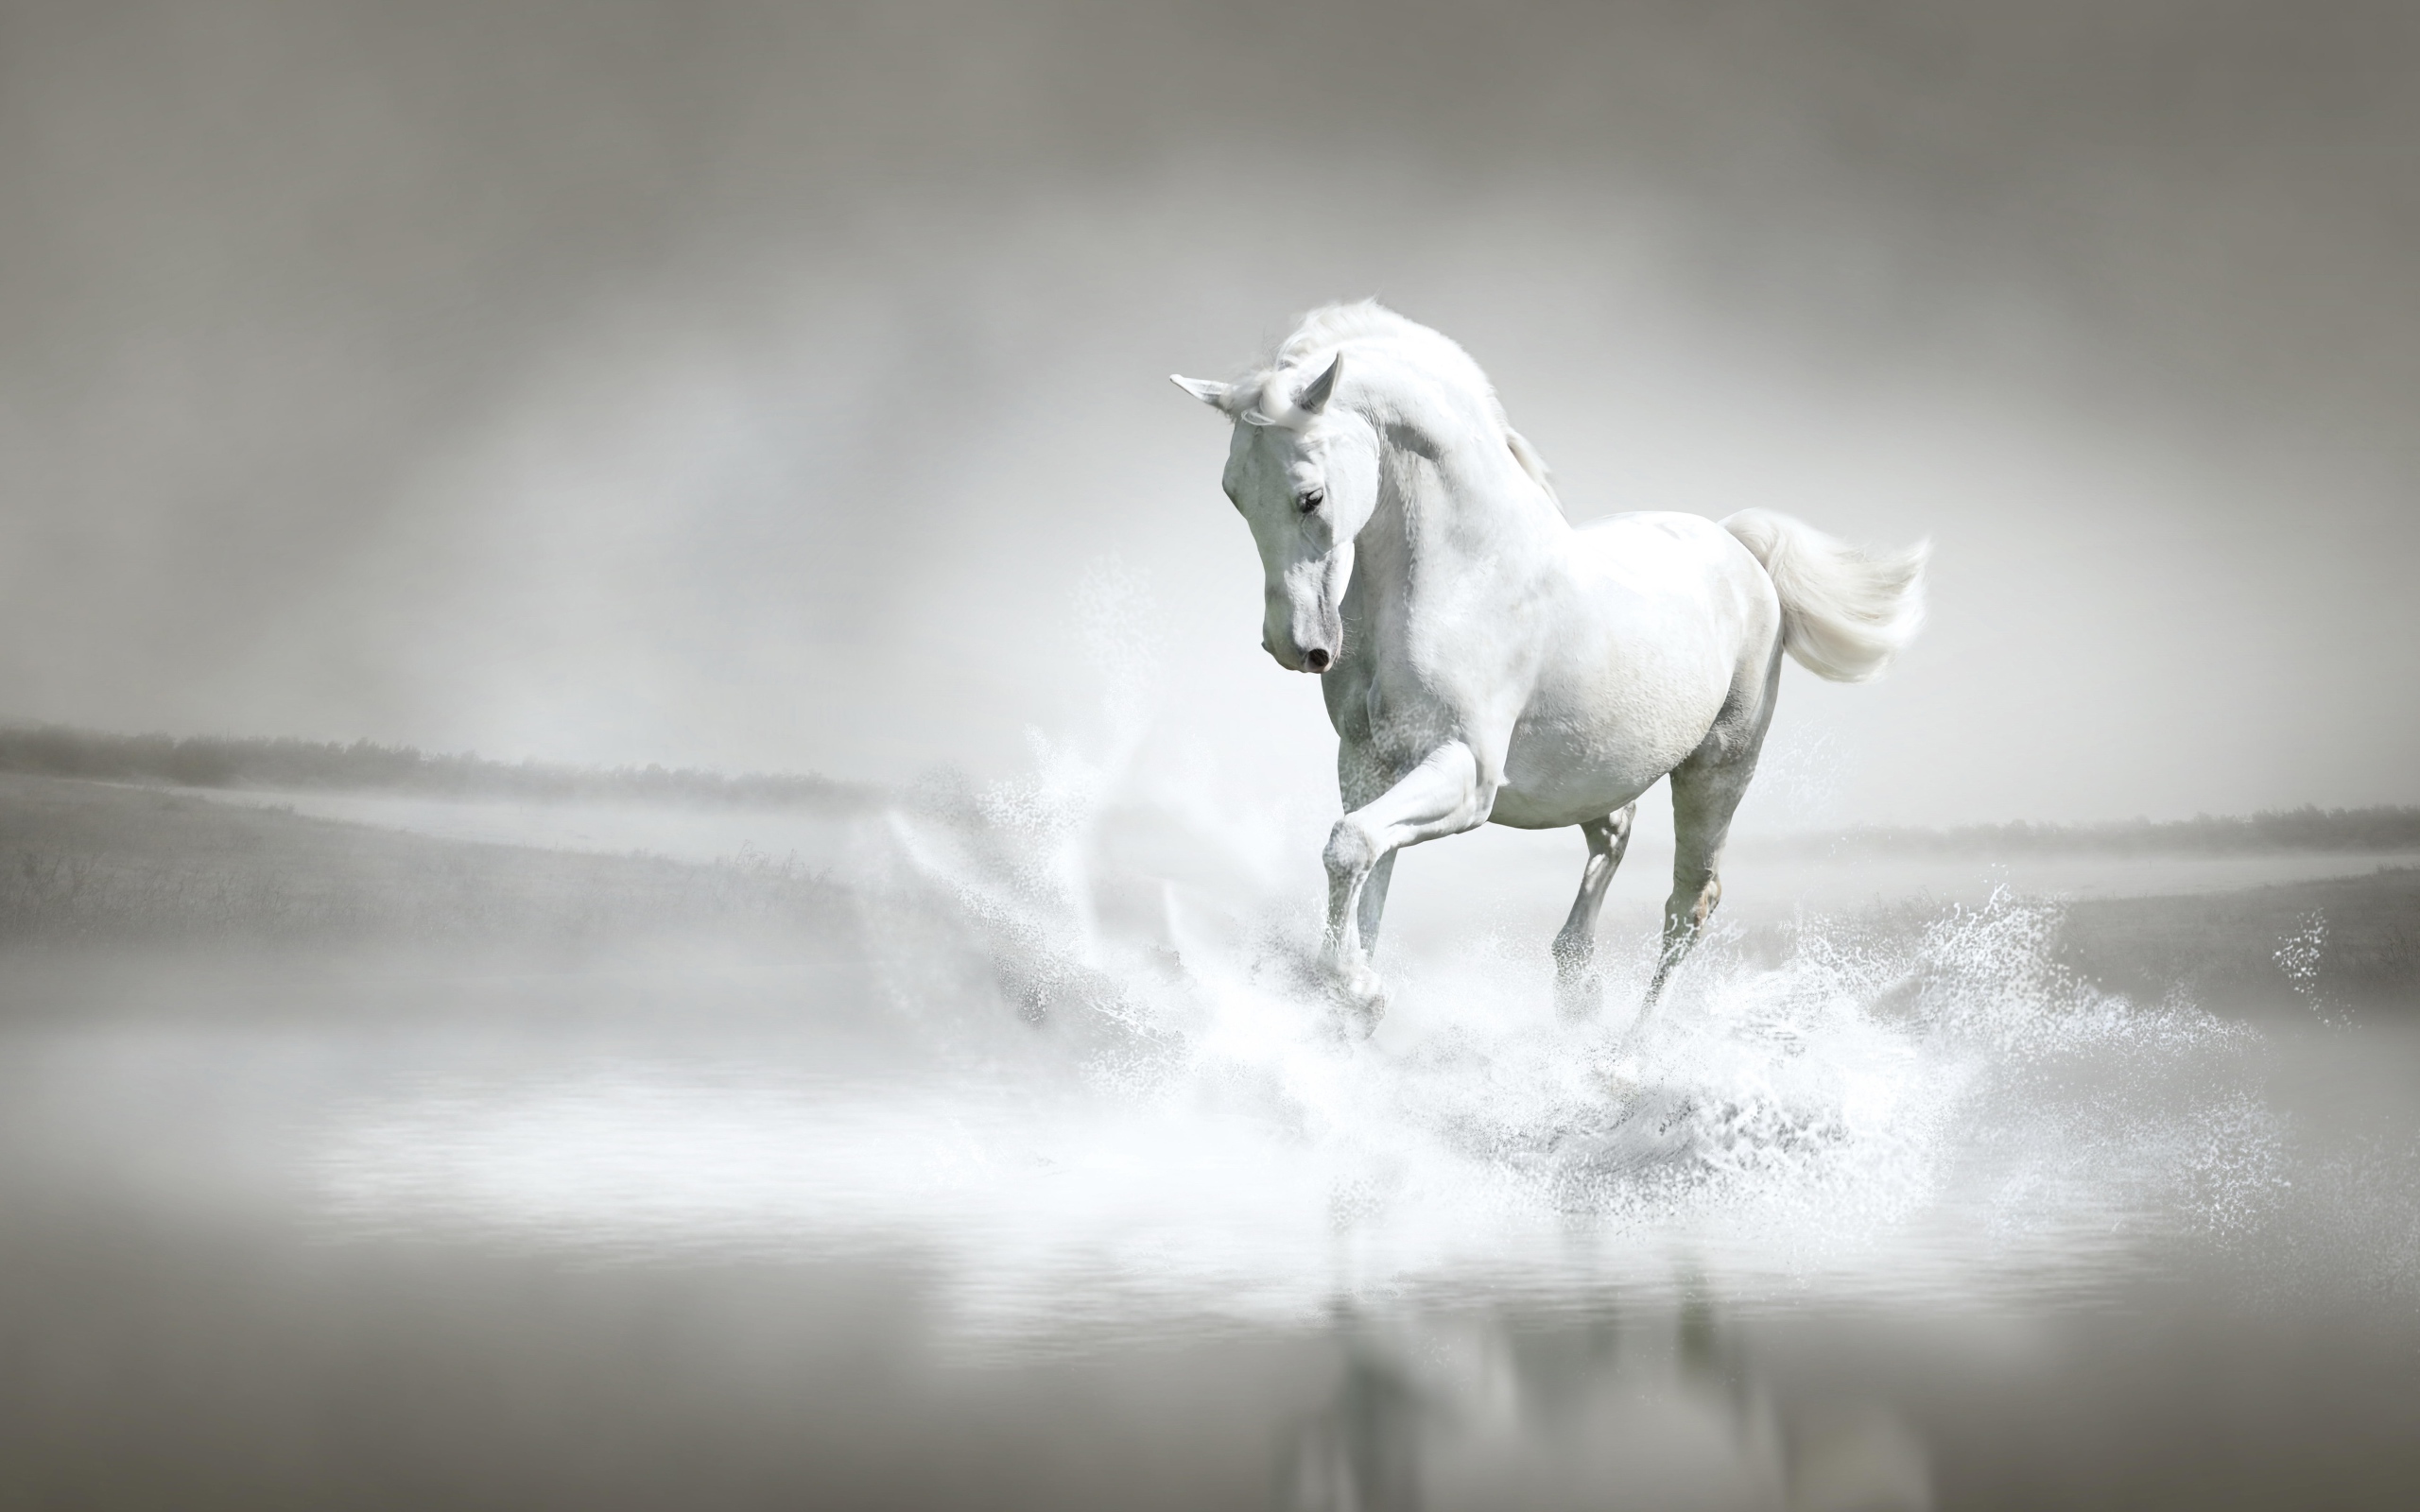 A beautiful white horse runs along the water